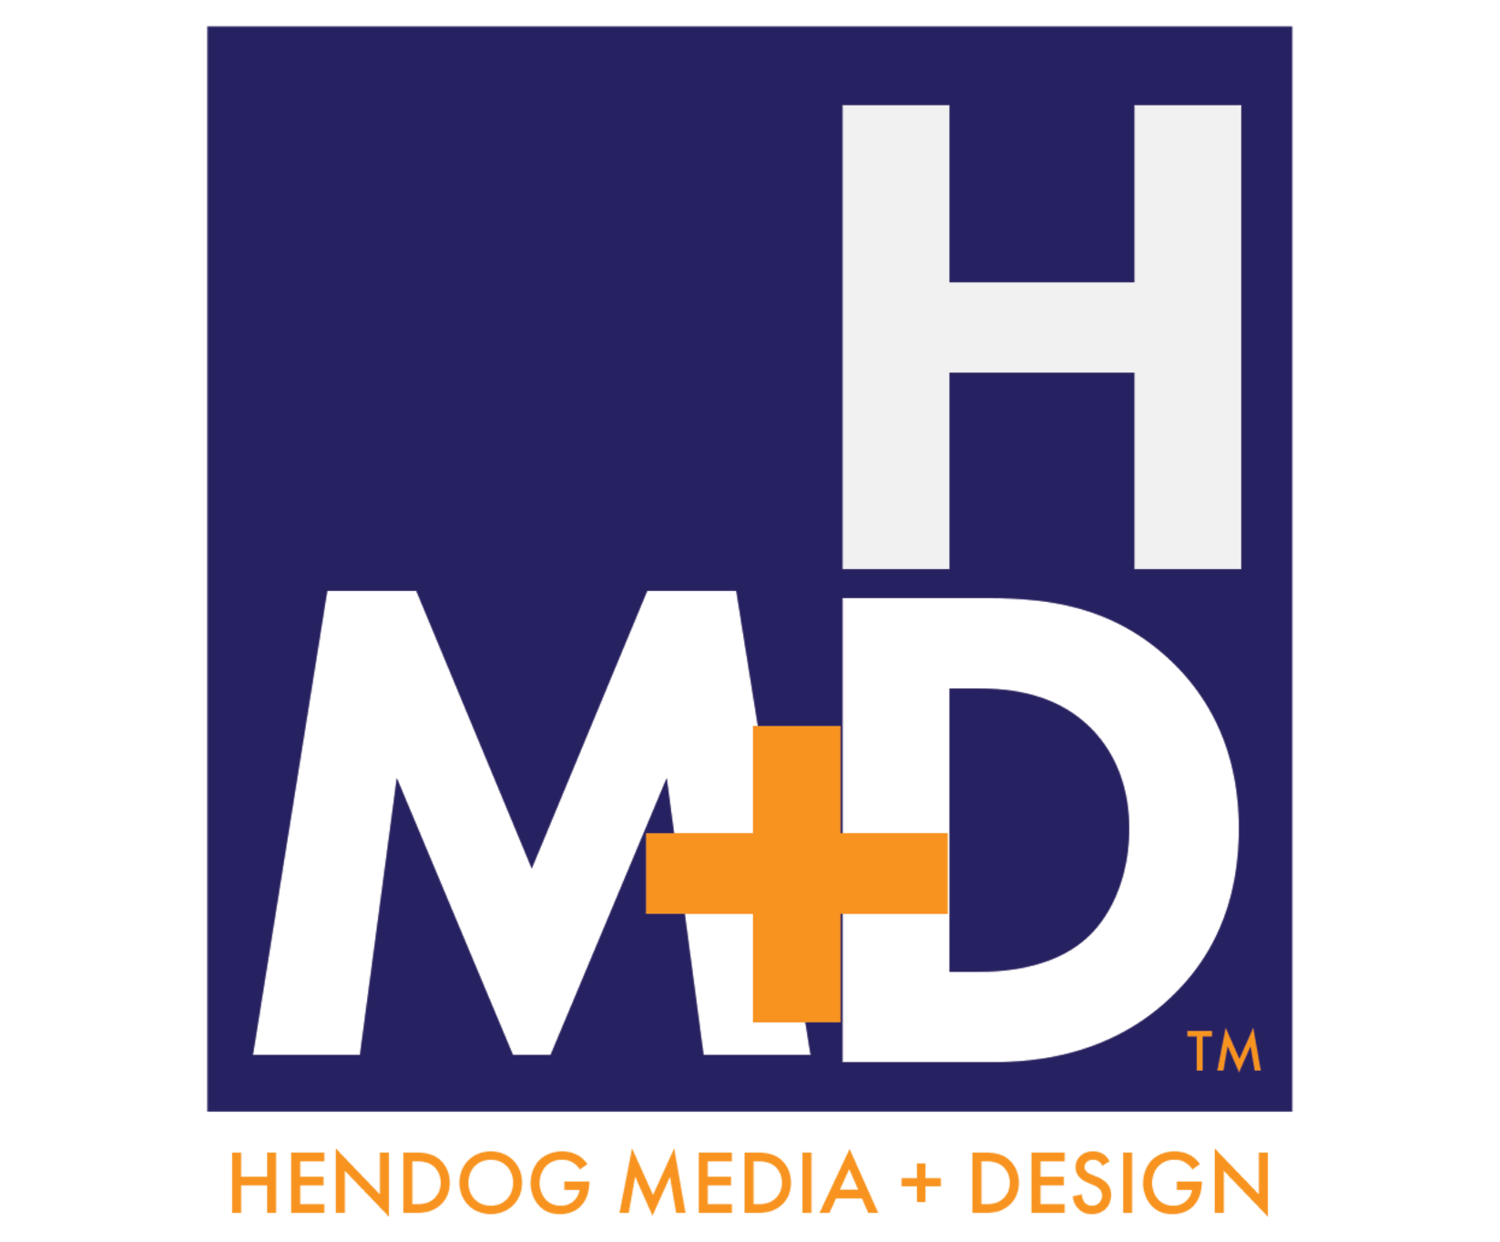 HENDOG MEDIA + DESIGN